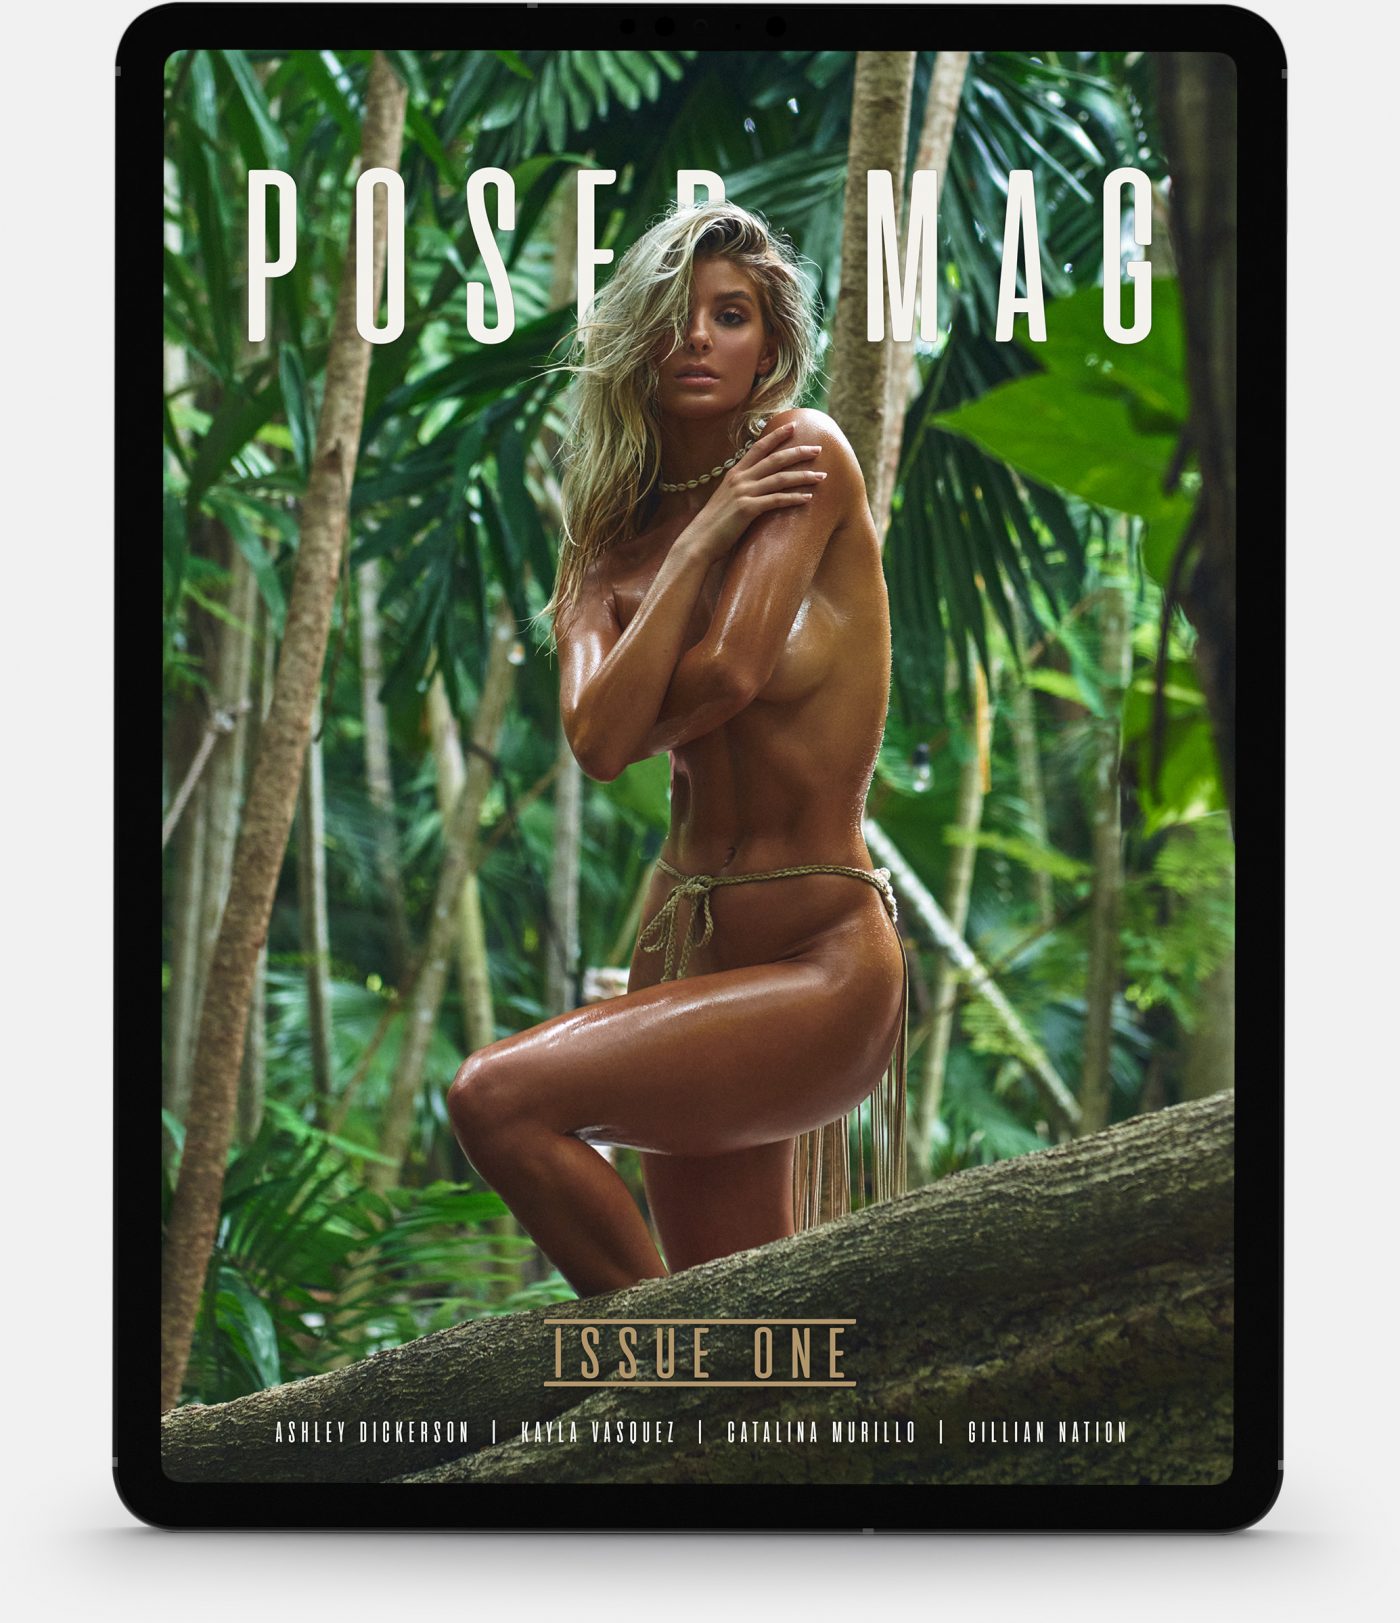 Ashley Dickerson model posing nude for POSED MAG digital magazine